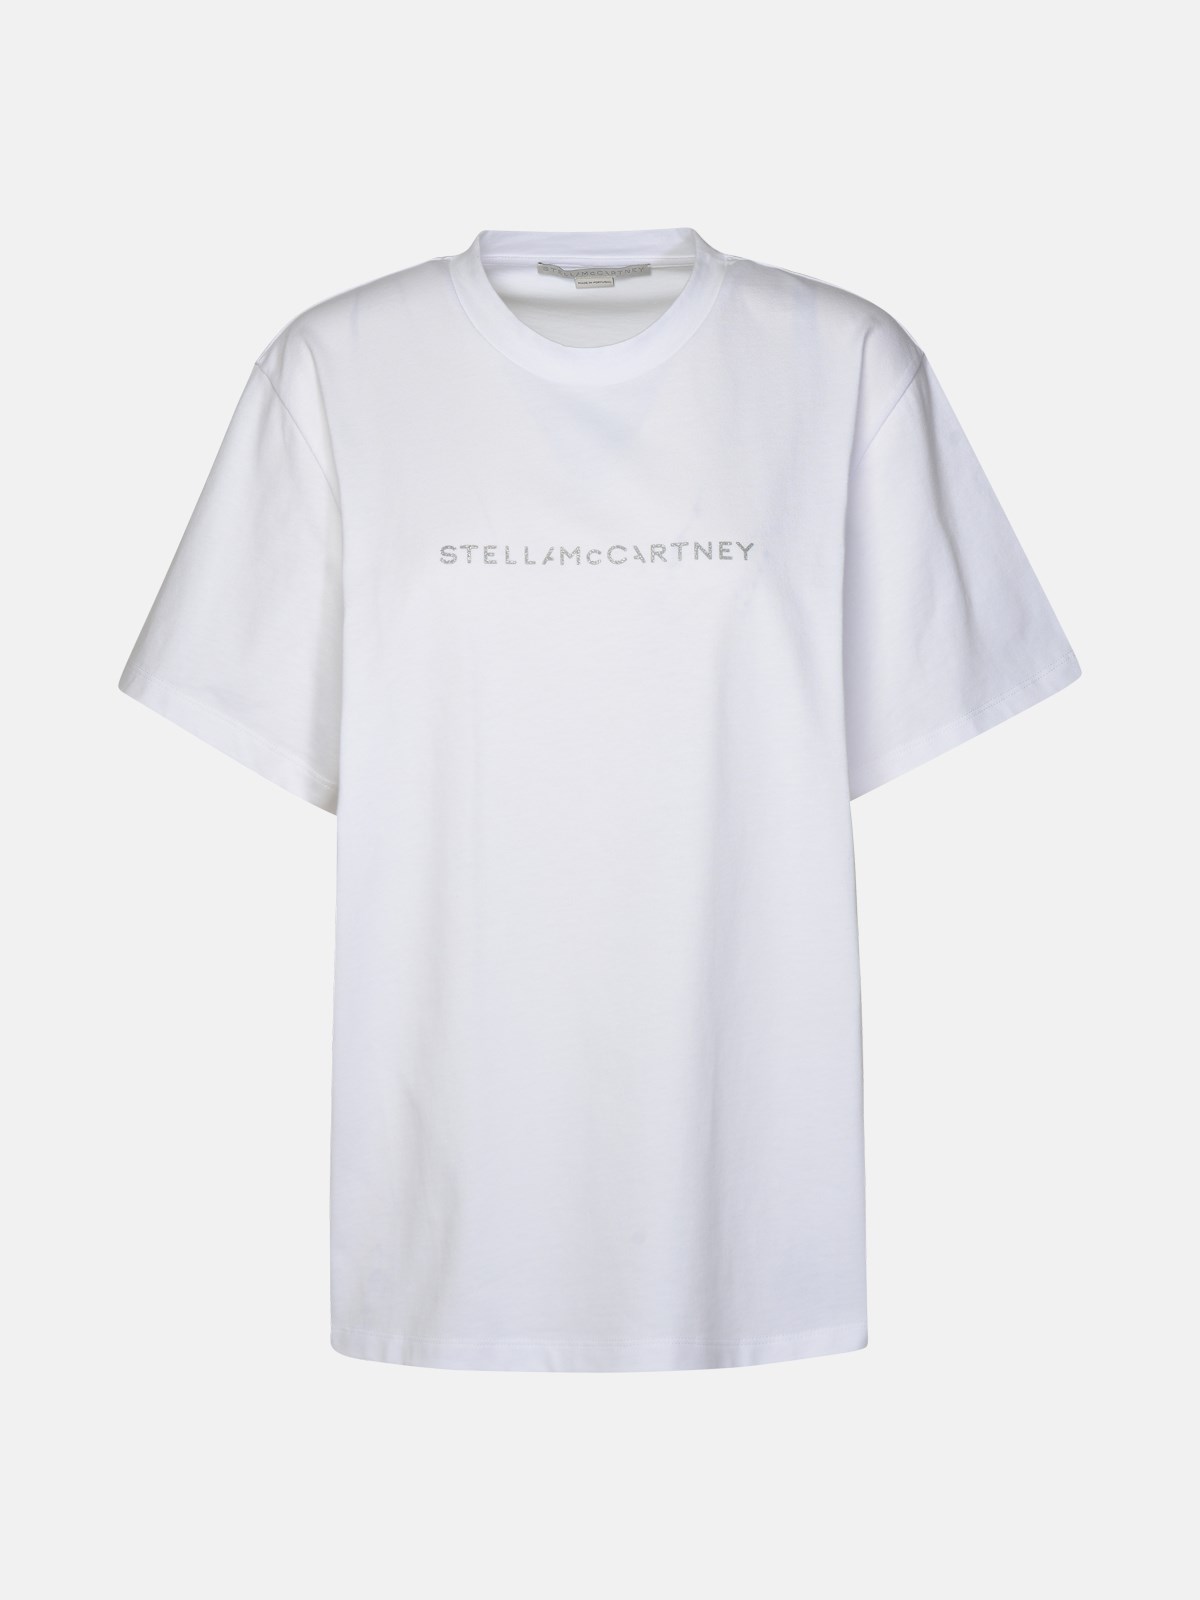 Stella Mccartney White Organic Cotton T-shirt